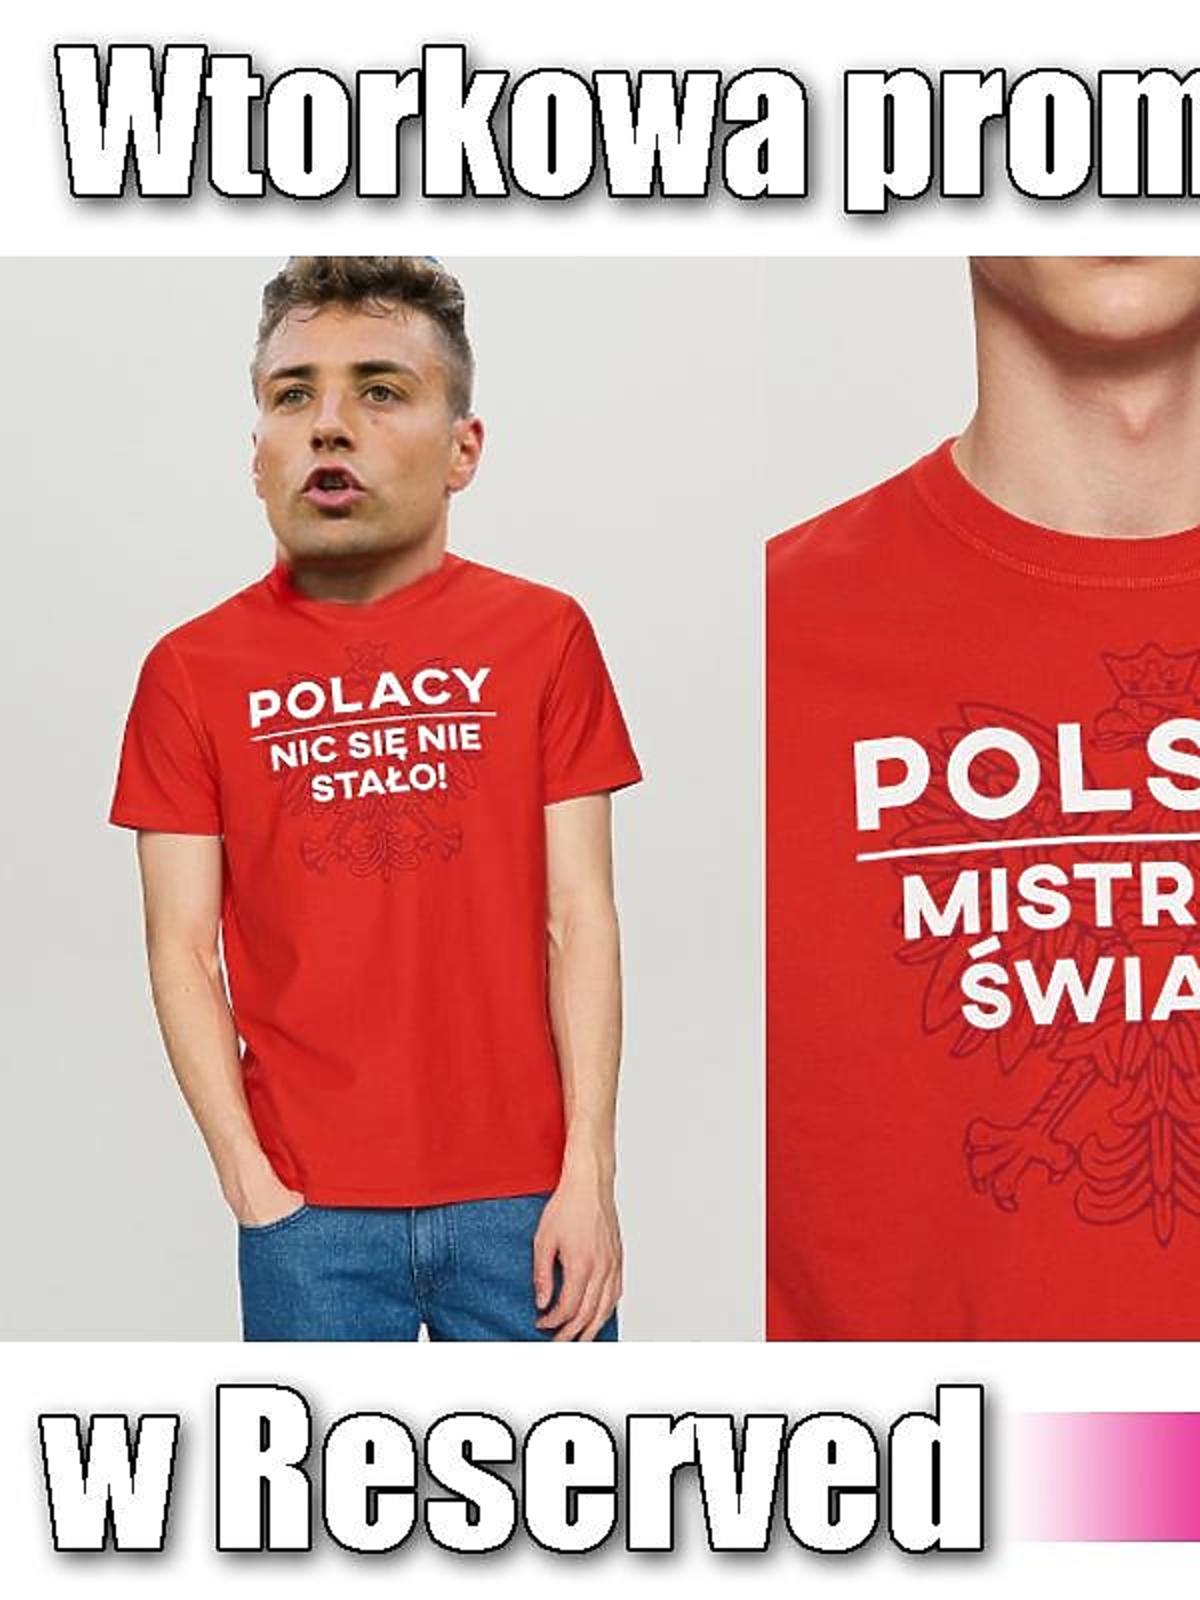 Memy po meczy Polska Senegal 